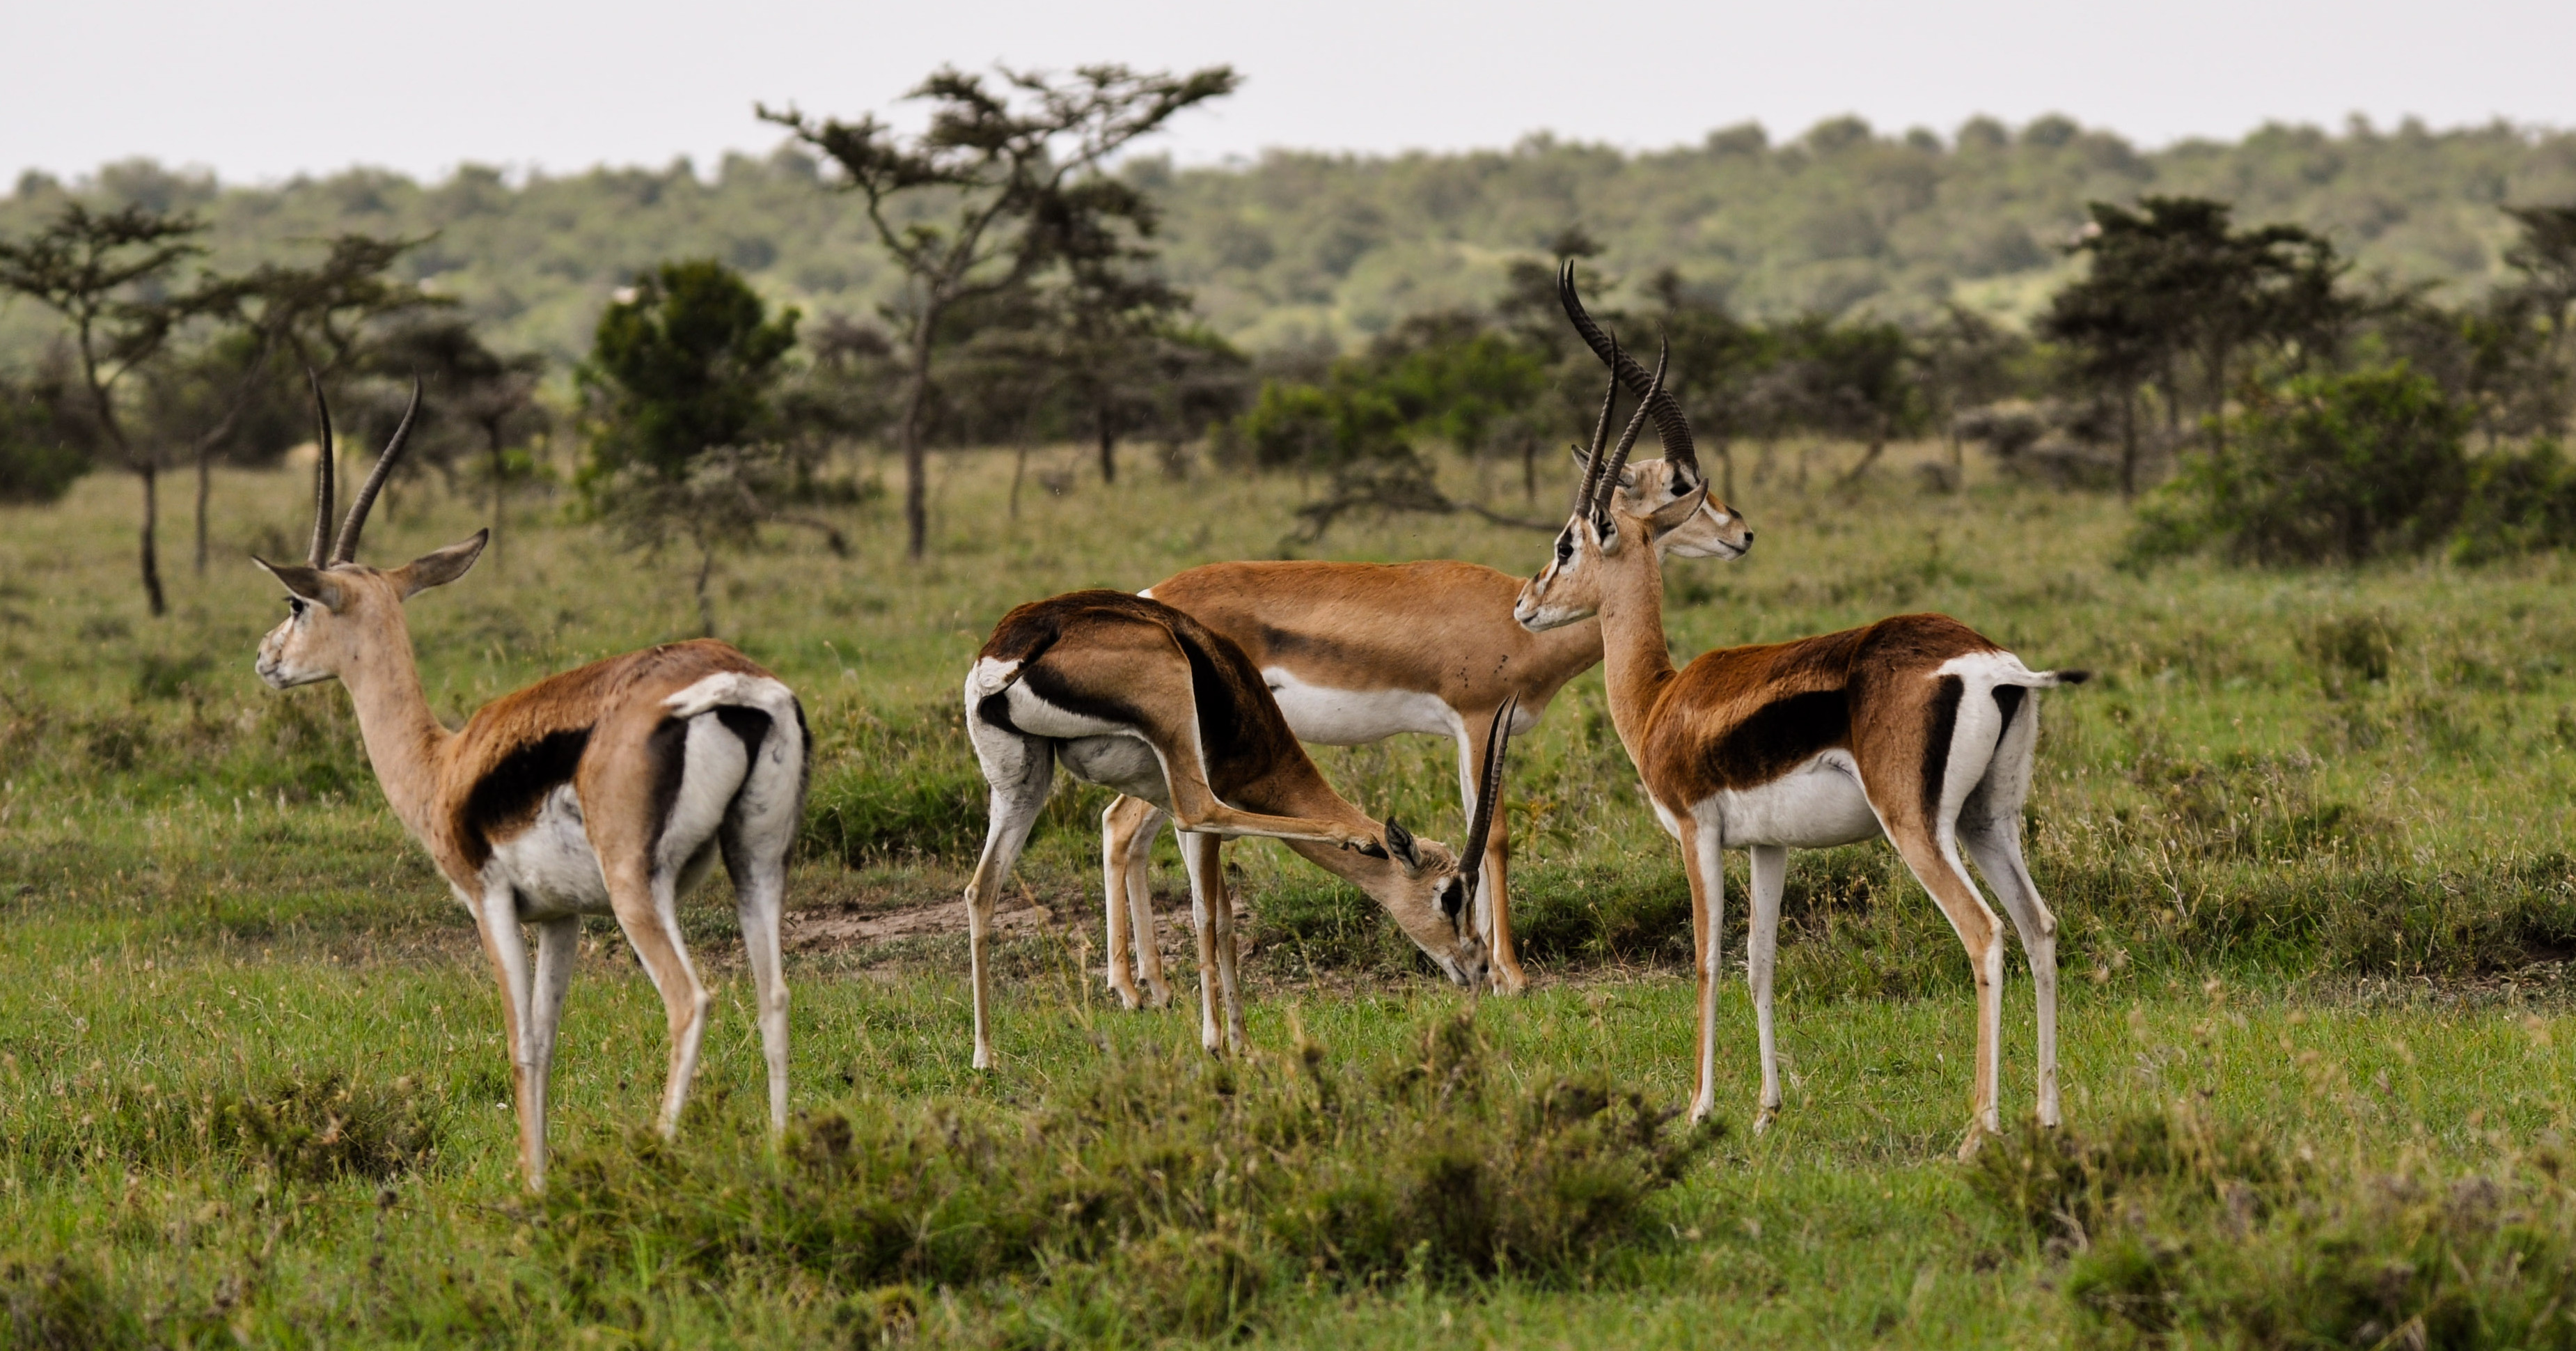 A group of Grant’s gazelles